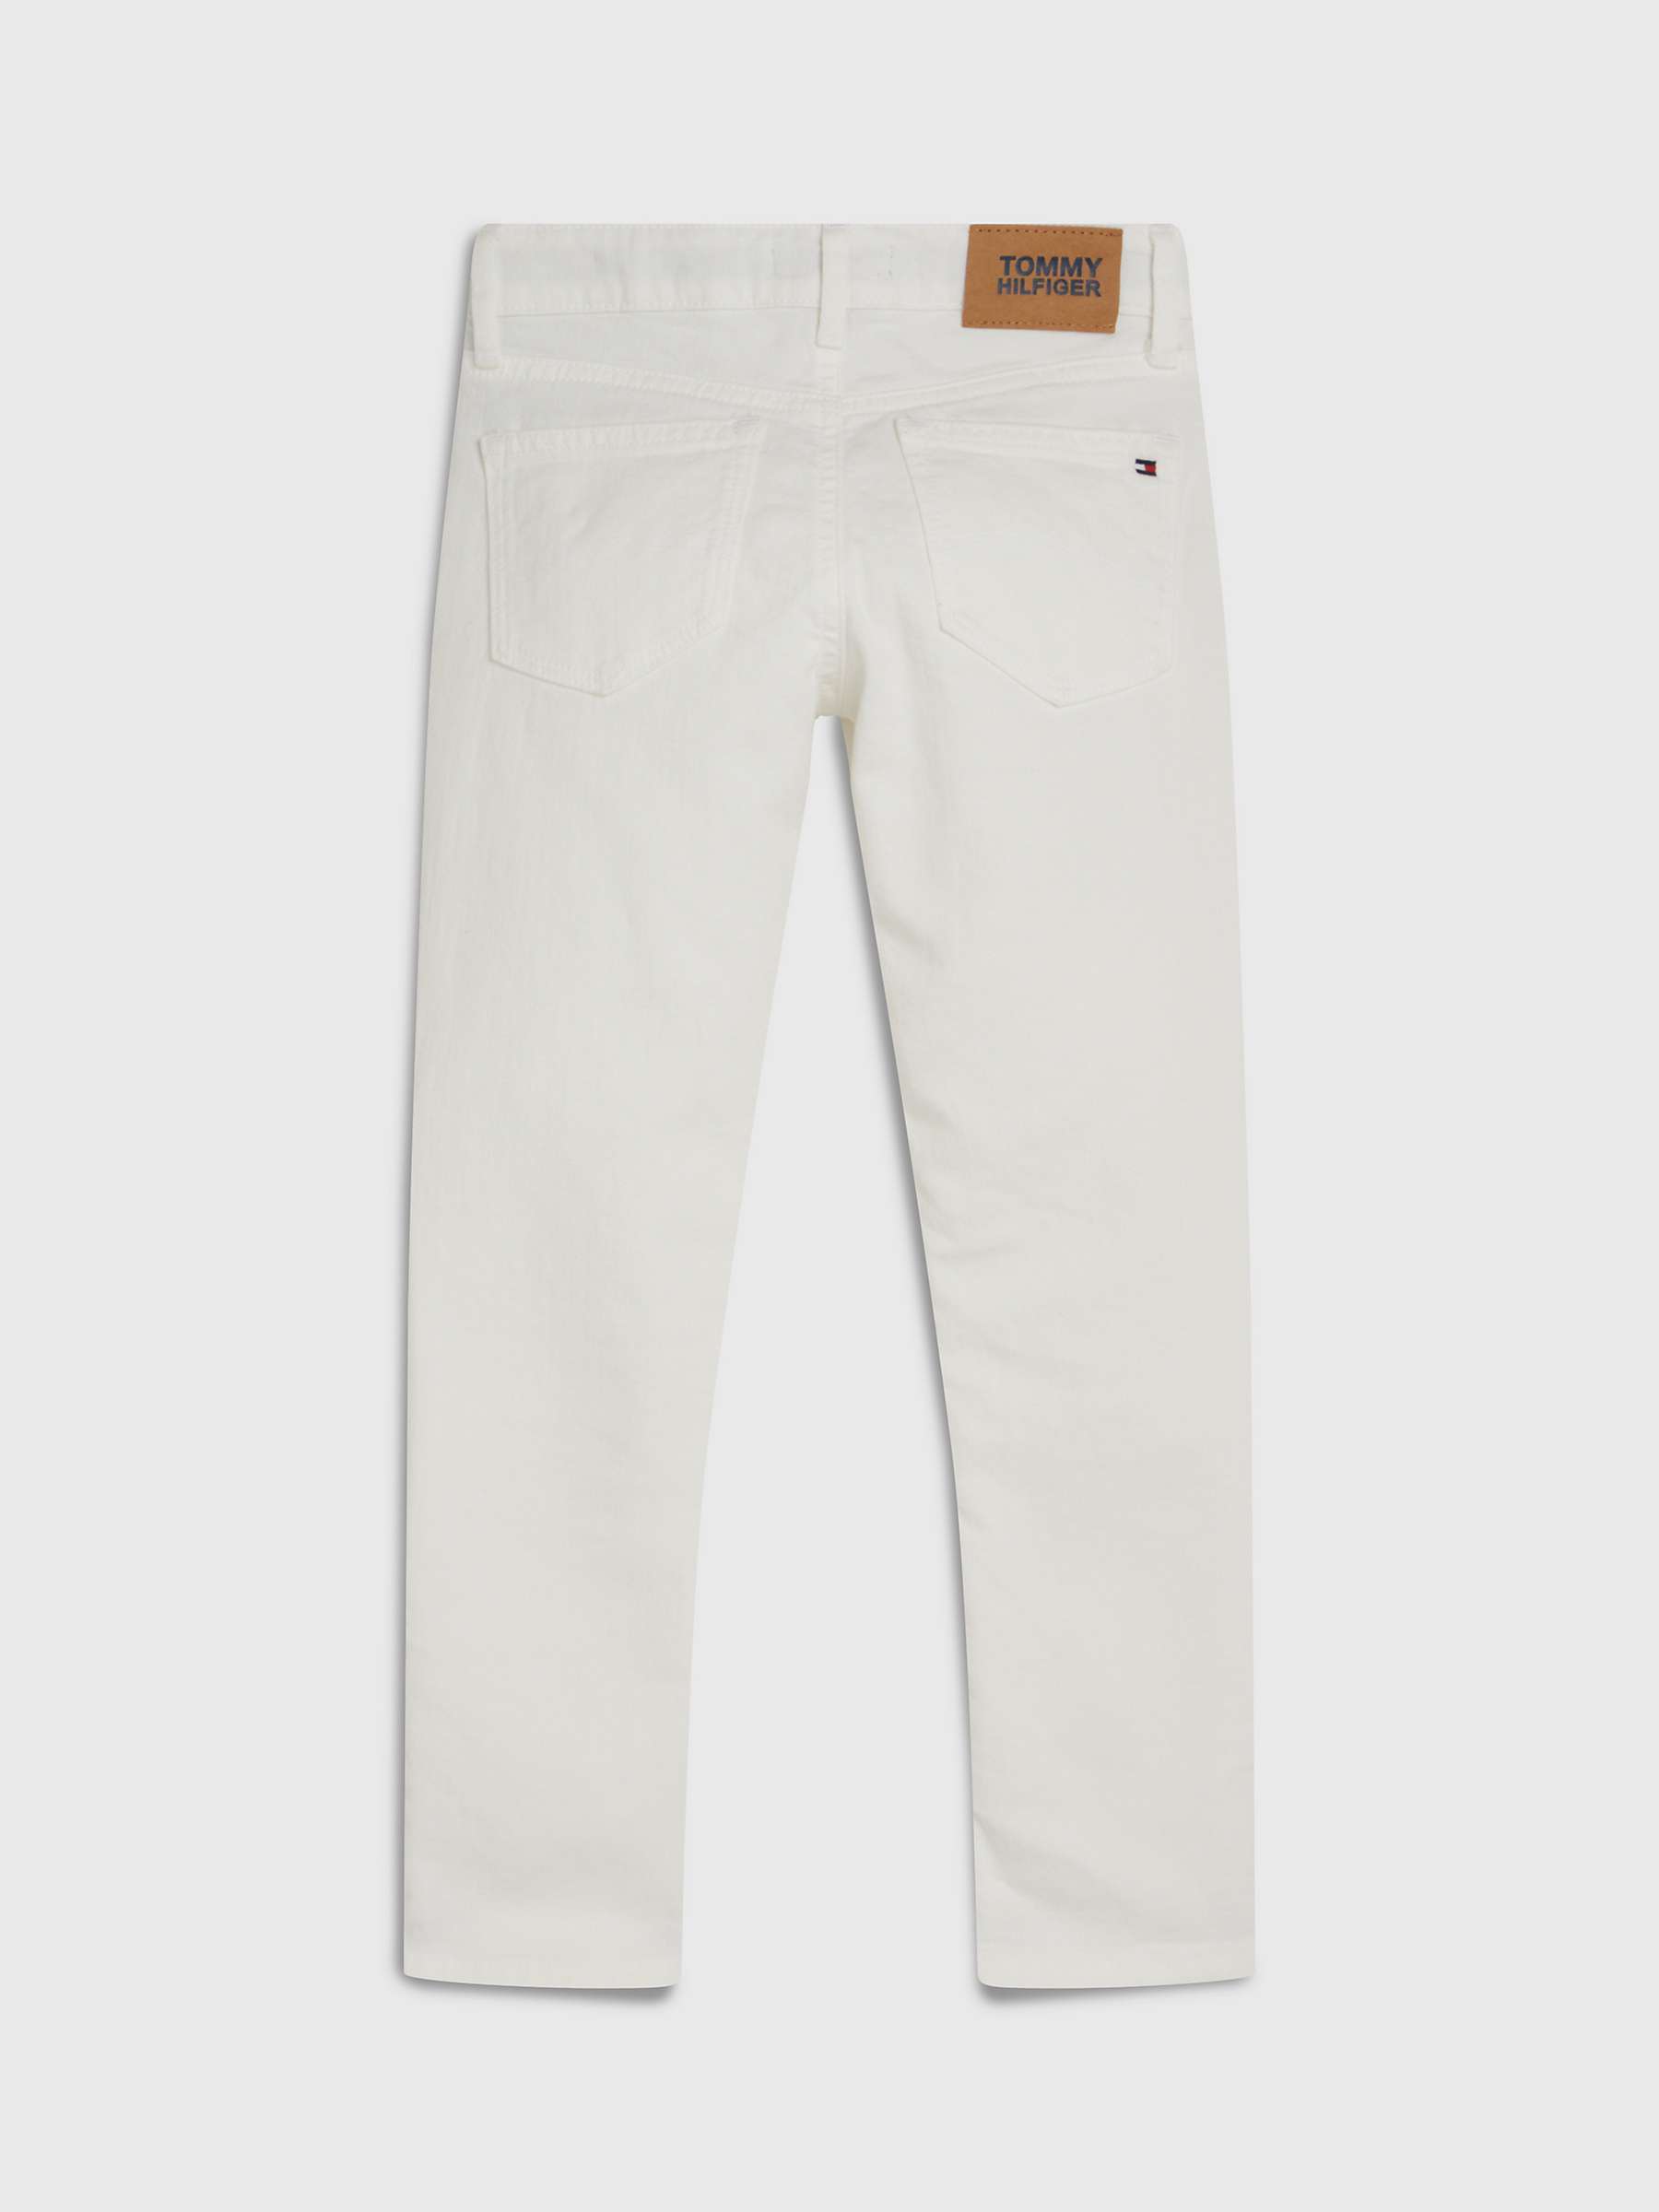 Buy Tommy Hilfiger Kids' Nora Skinny Jeans, Sailwhite Online at johnlewis.com